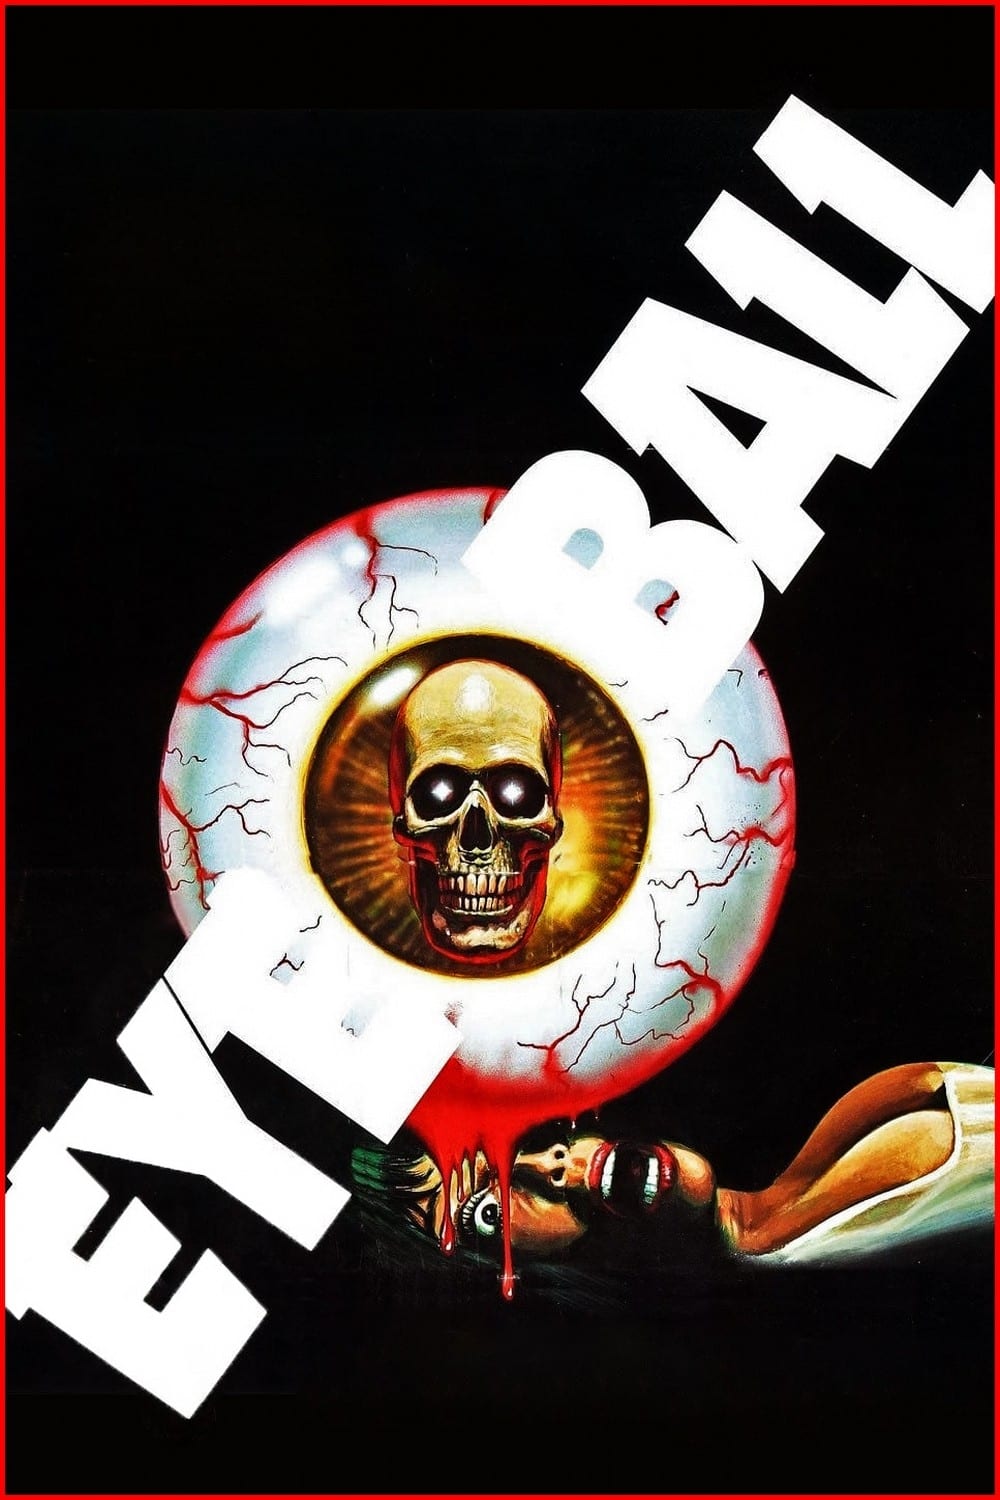 Eyeball (1975)